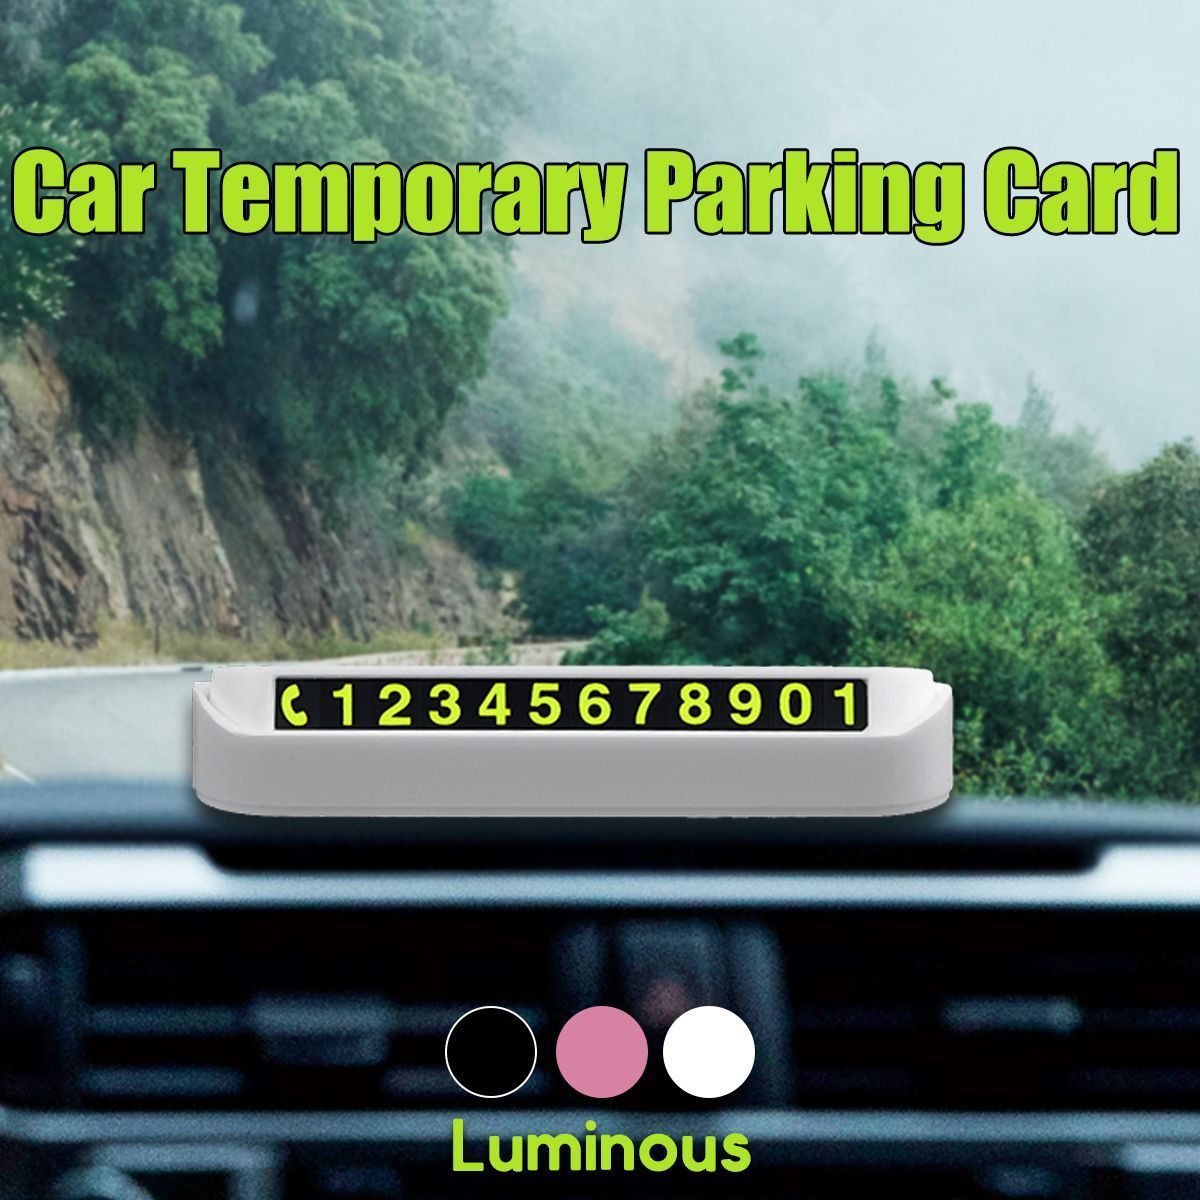 Temporary-Parking-Phone-Number-Card-Luminous-Night-Hidden-For-Car-Vehicle-1629250